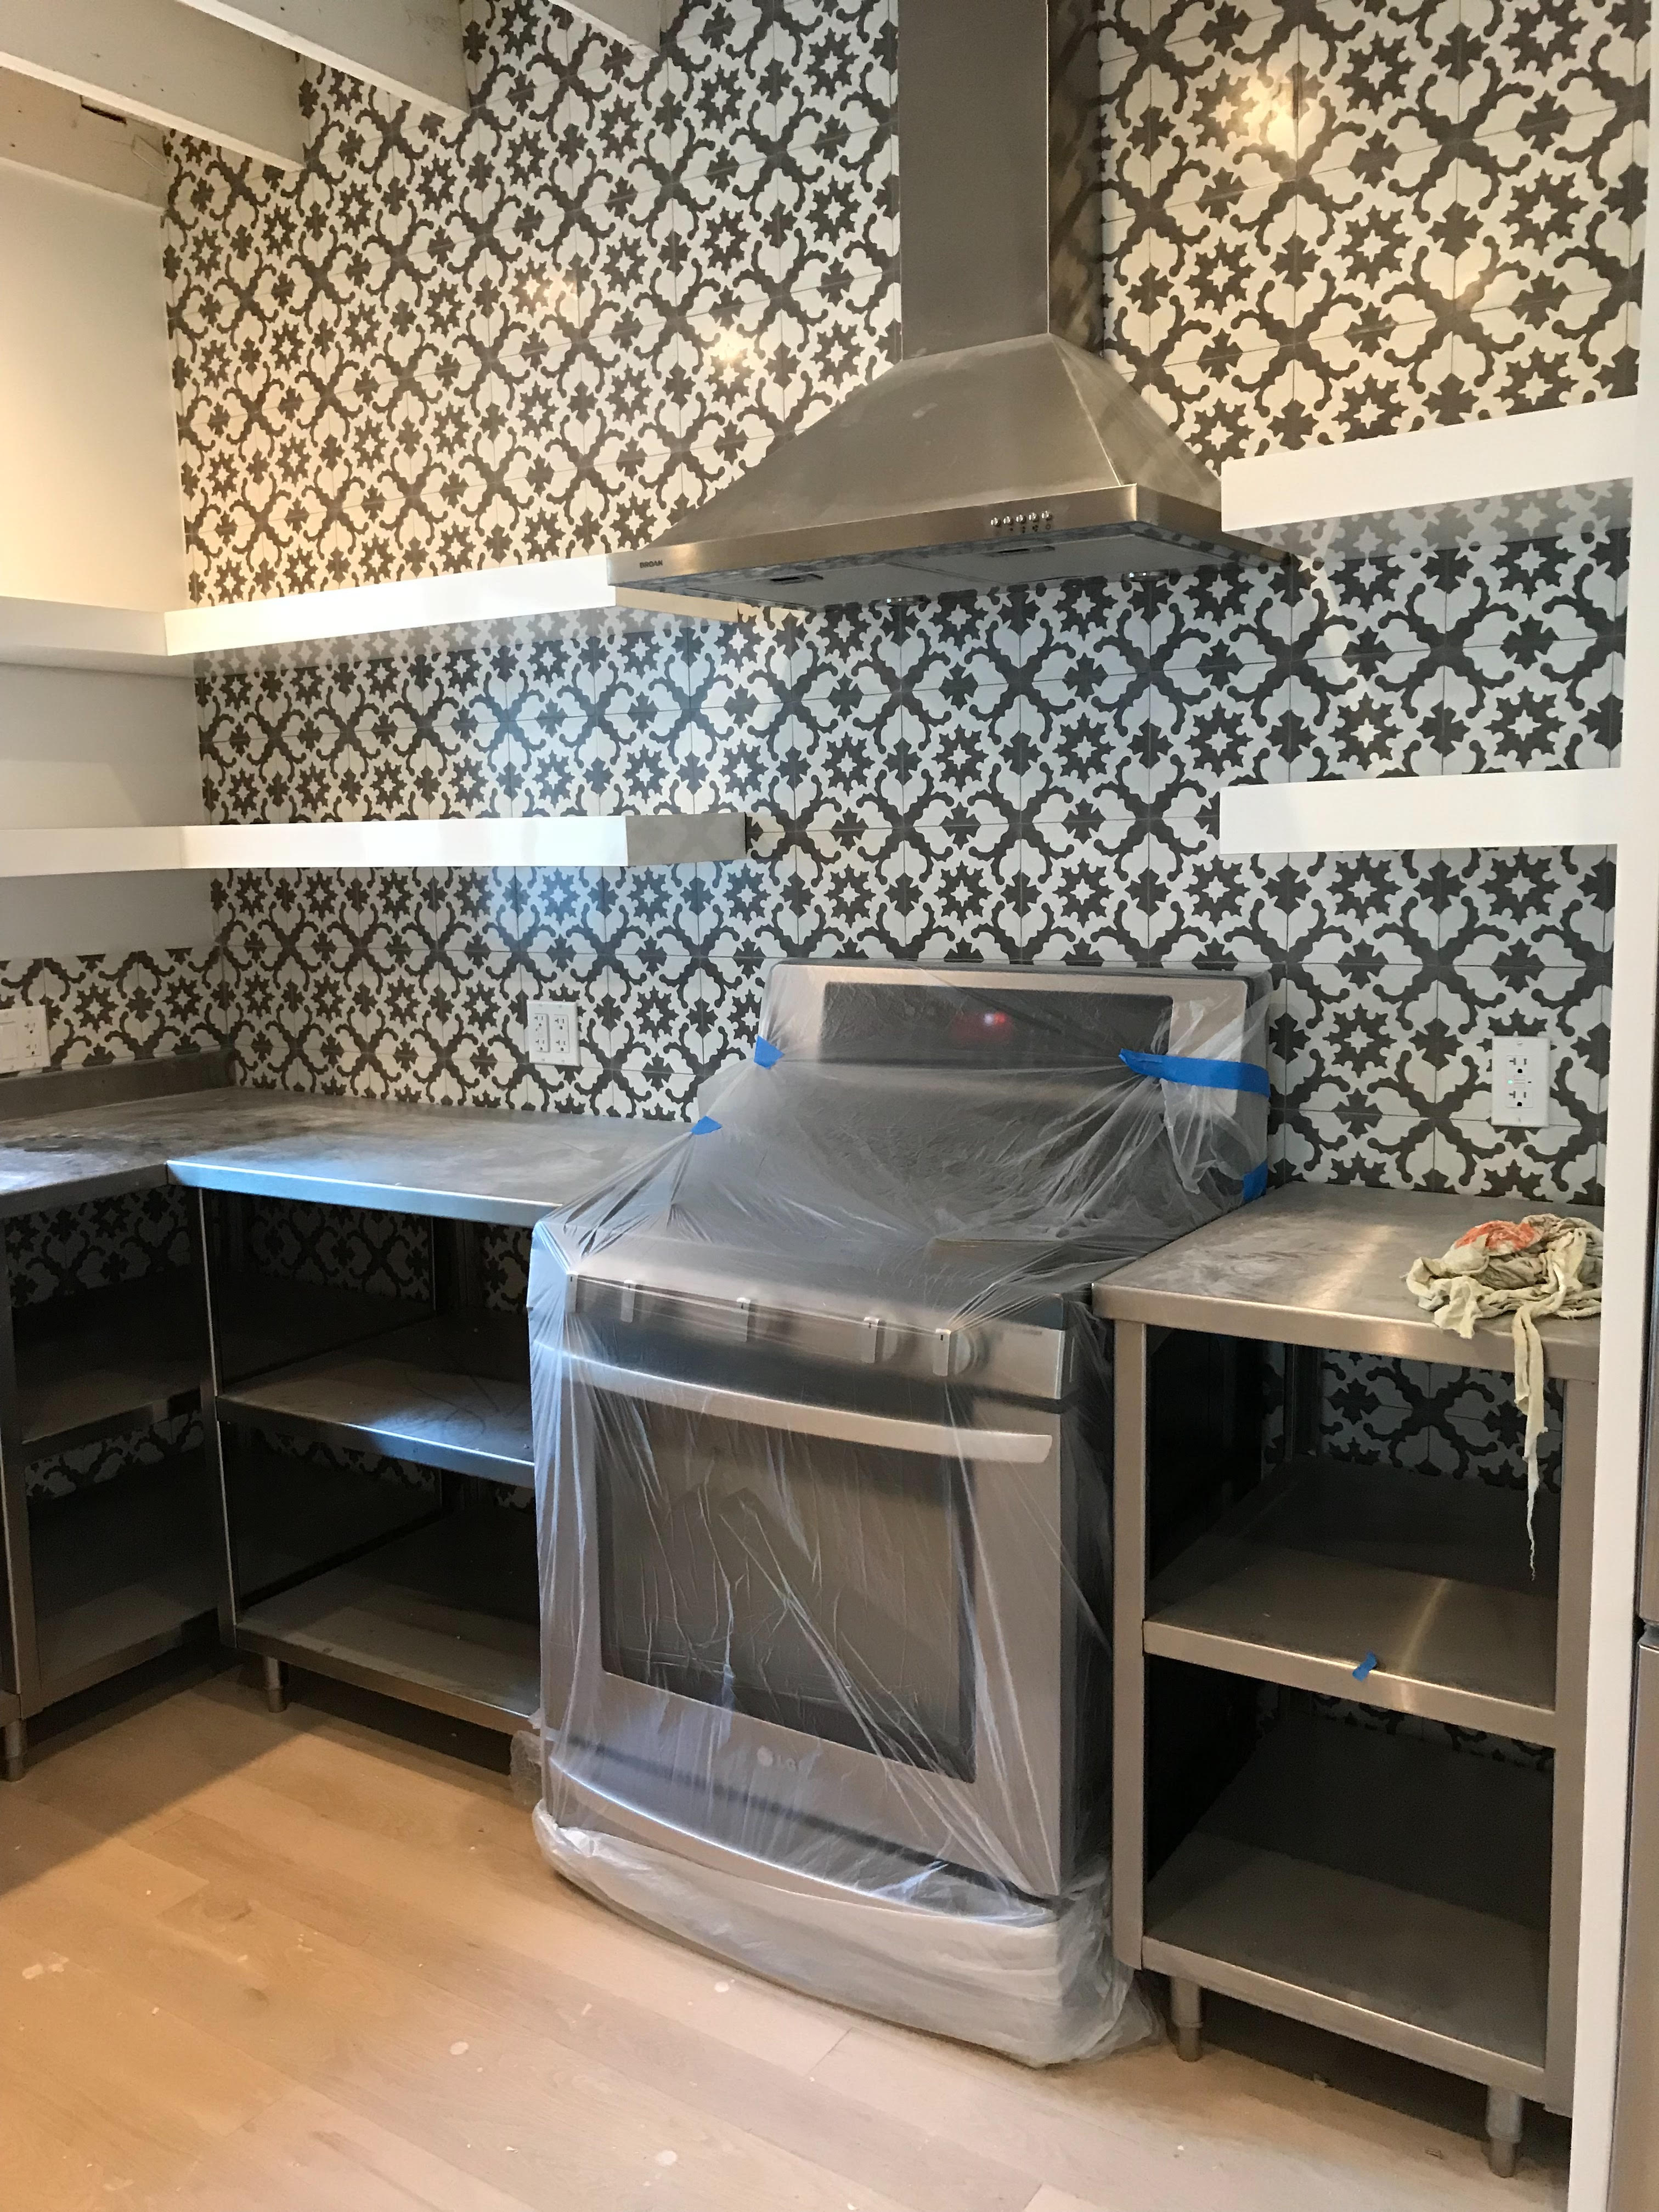  basic kitchen cabinets